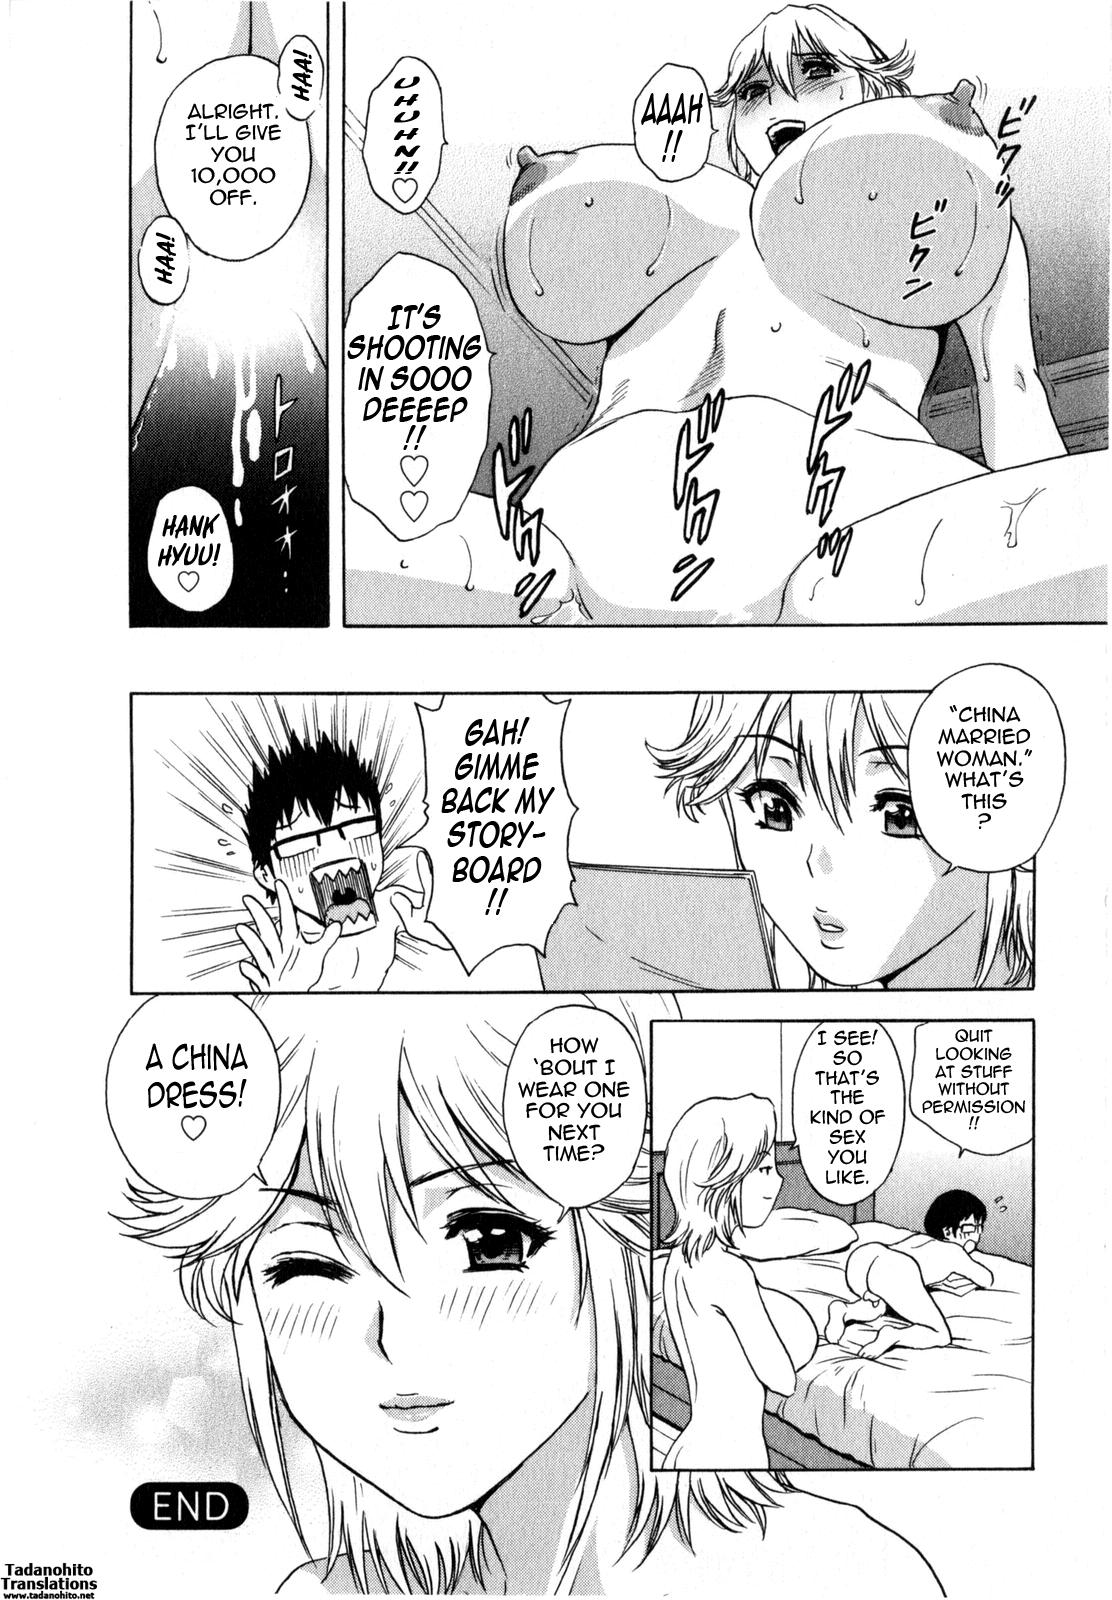 [Hidemaru] Life with Married Women Just Like a Manga 2 - Ch. 1-7 [English] {Tadanohito} 64